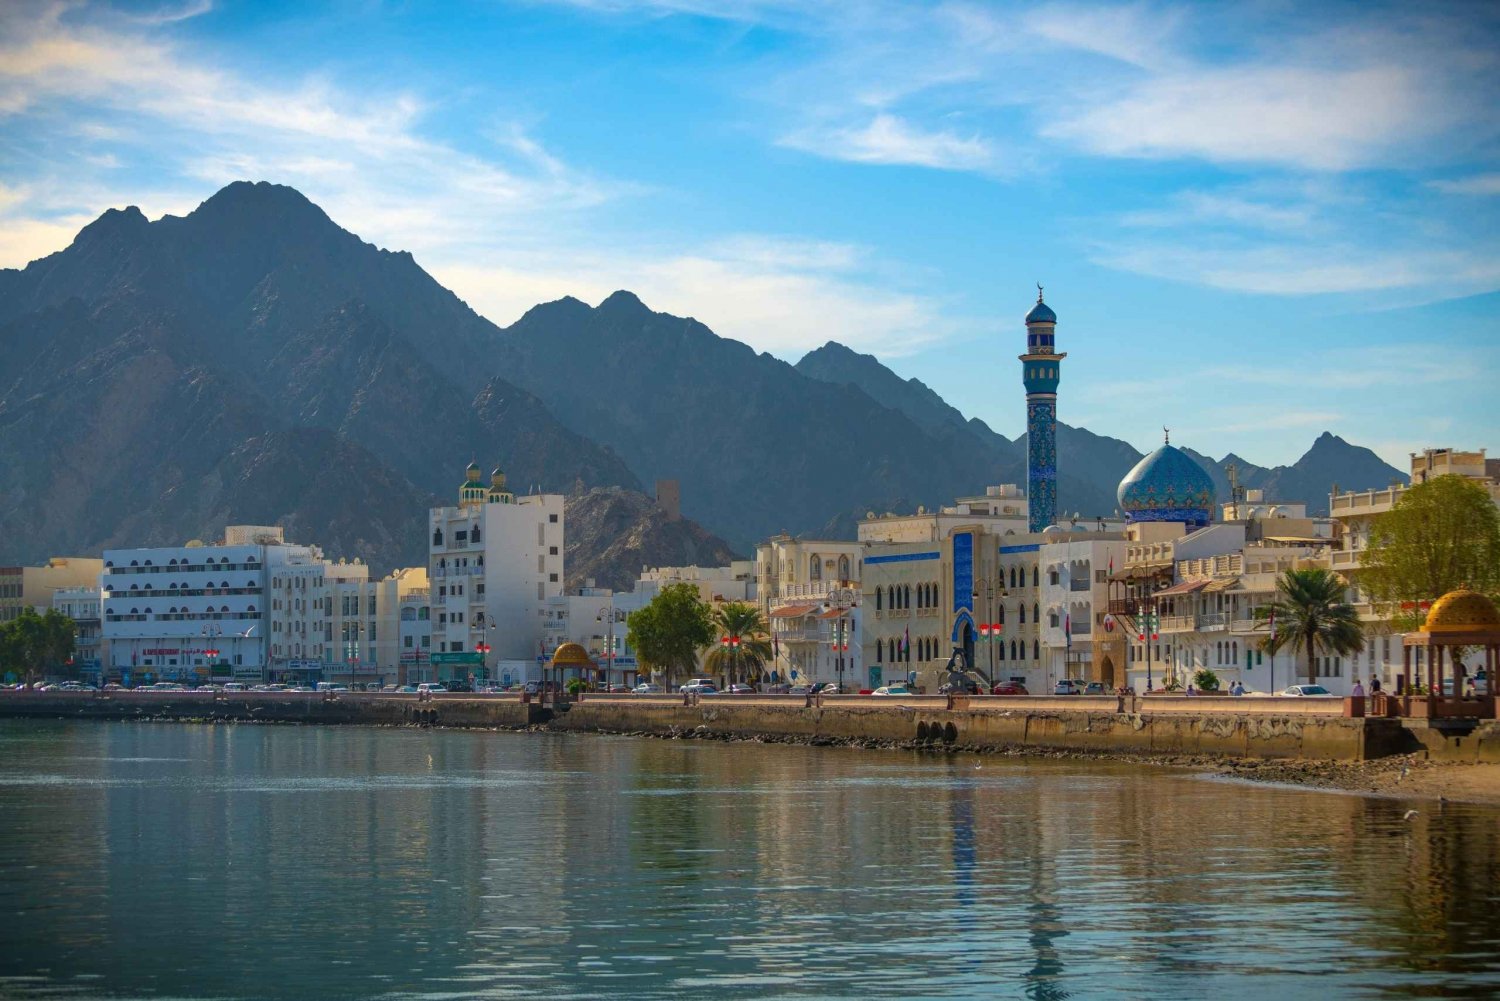 Muscat: Heldags privat stadsrundtur med lyxbil med guide